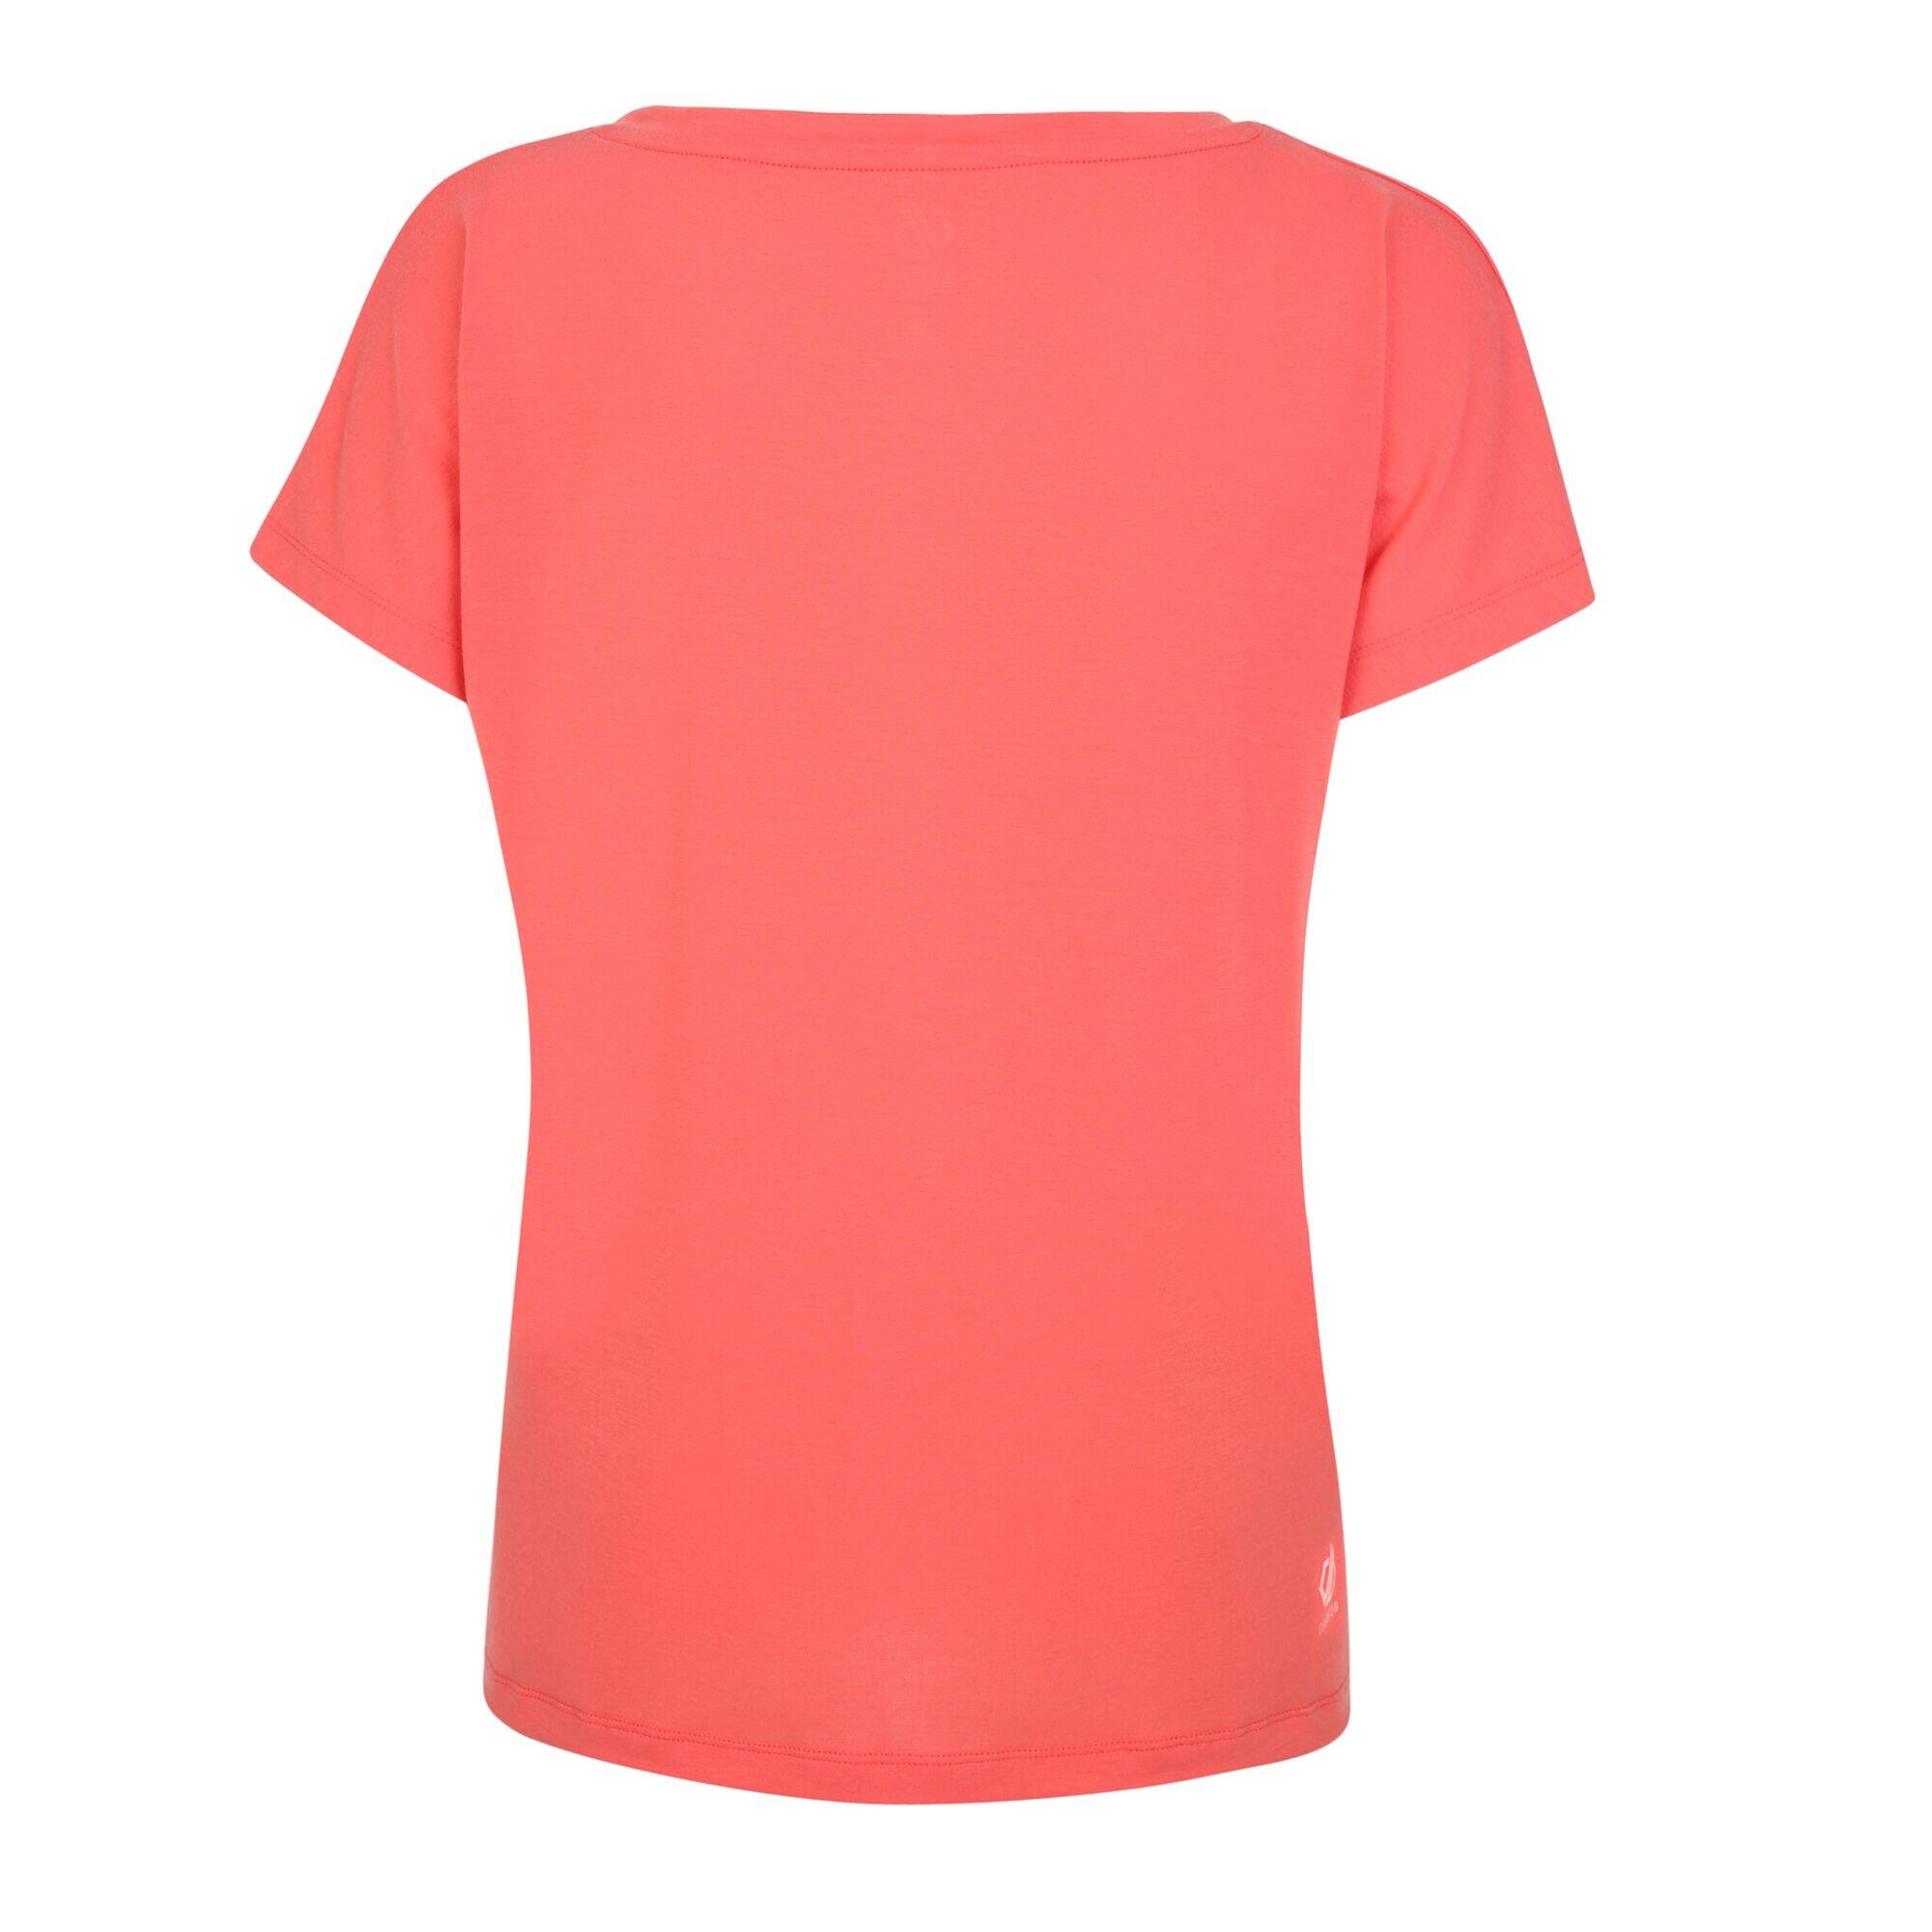 Womens/Ladies Persisting Marl Lightweight TShirt (Neon Peach) 2/5